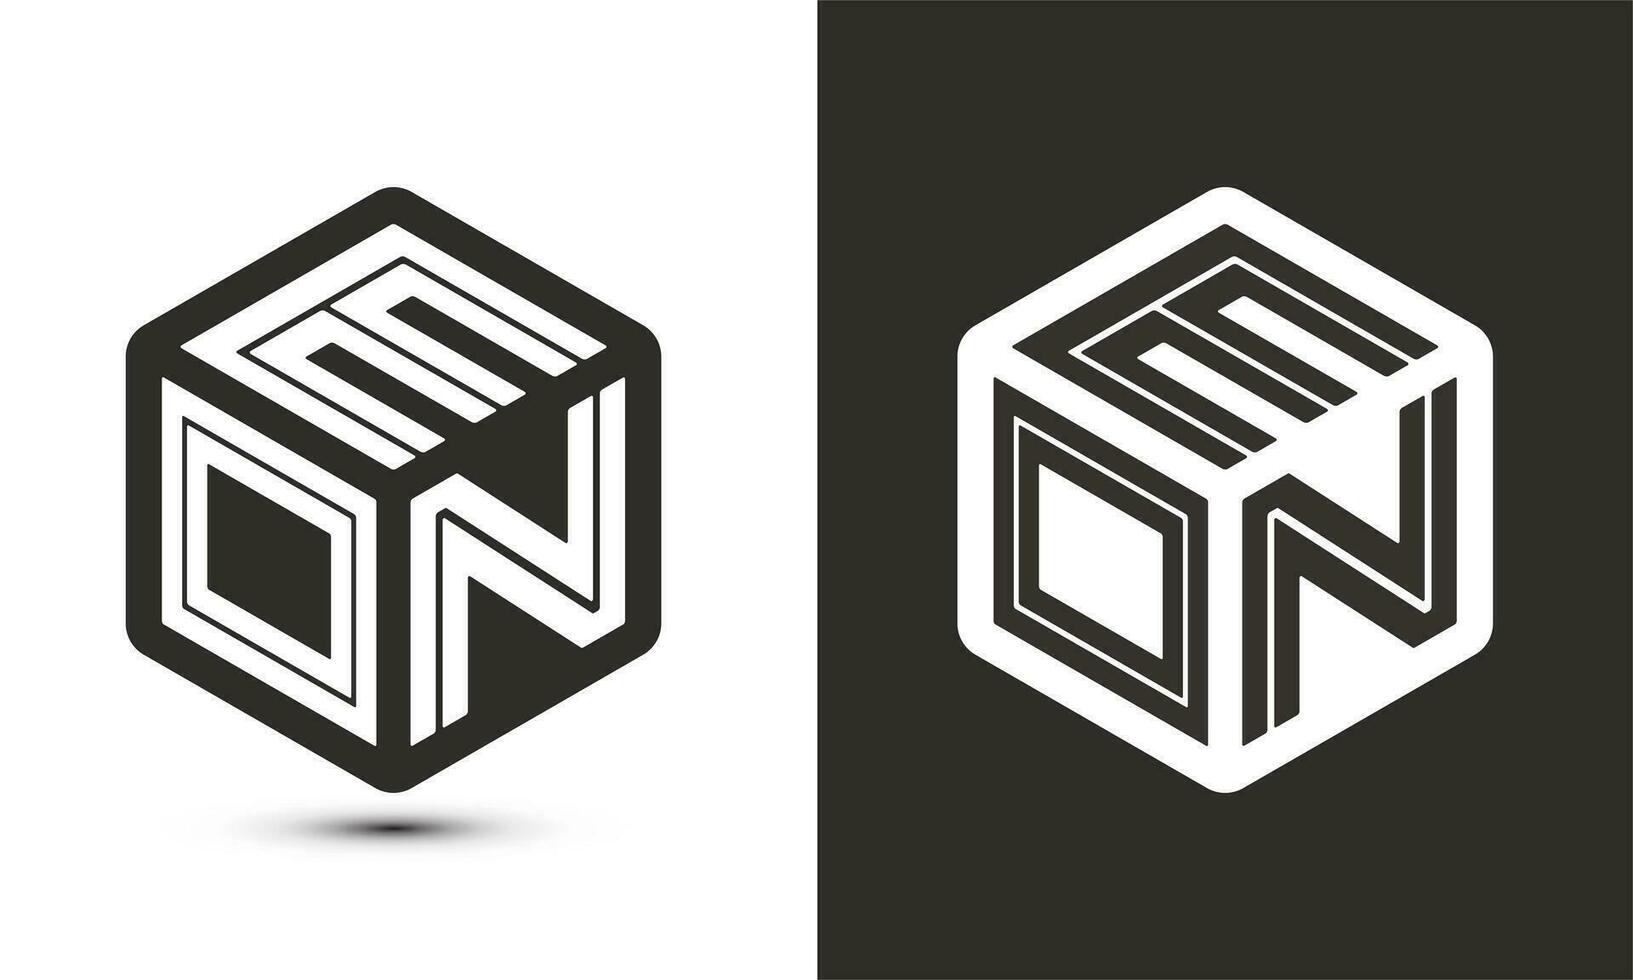 Eón letra logo diseño con ilustrador cubo logo, vector logo moderno alfabeto fuente superposición estilo.